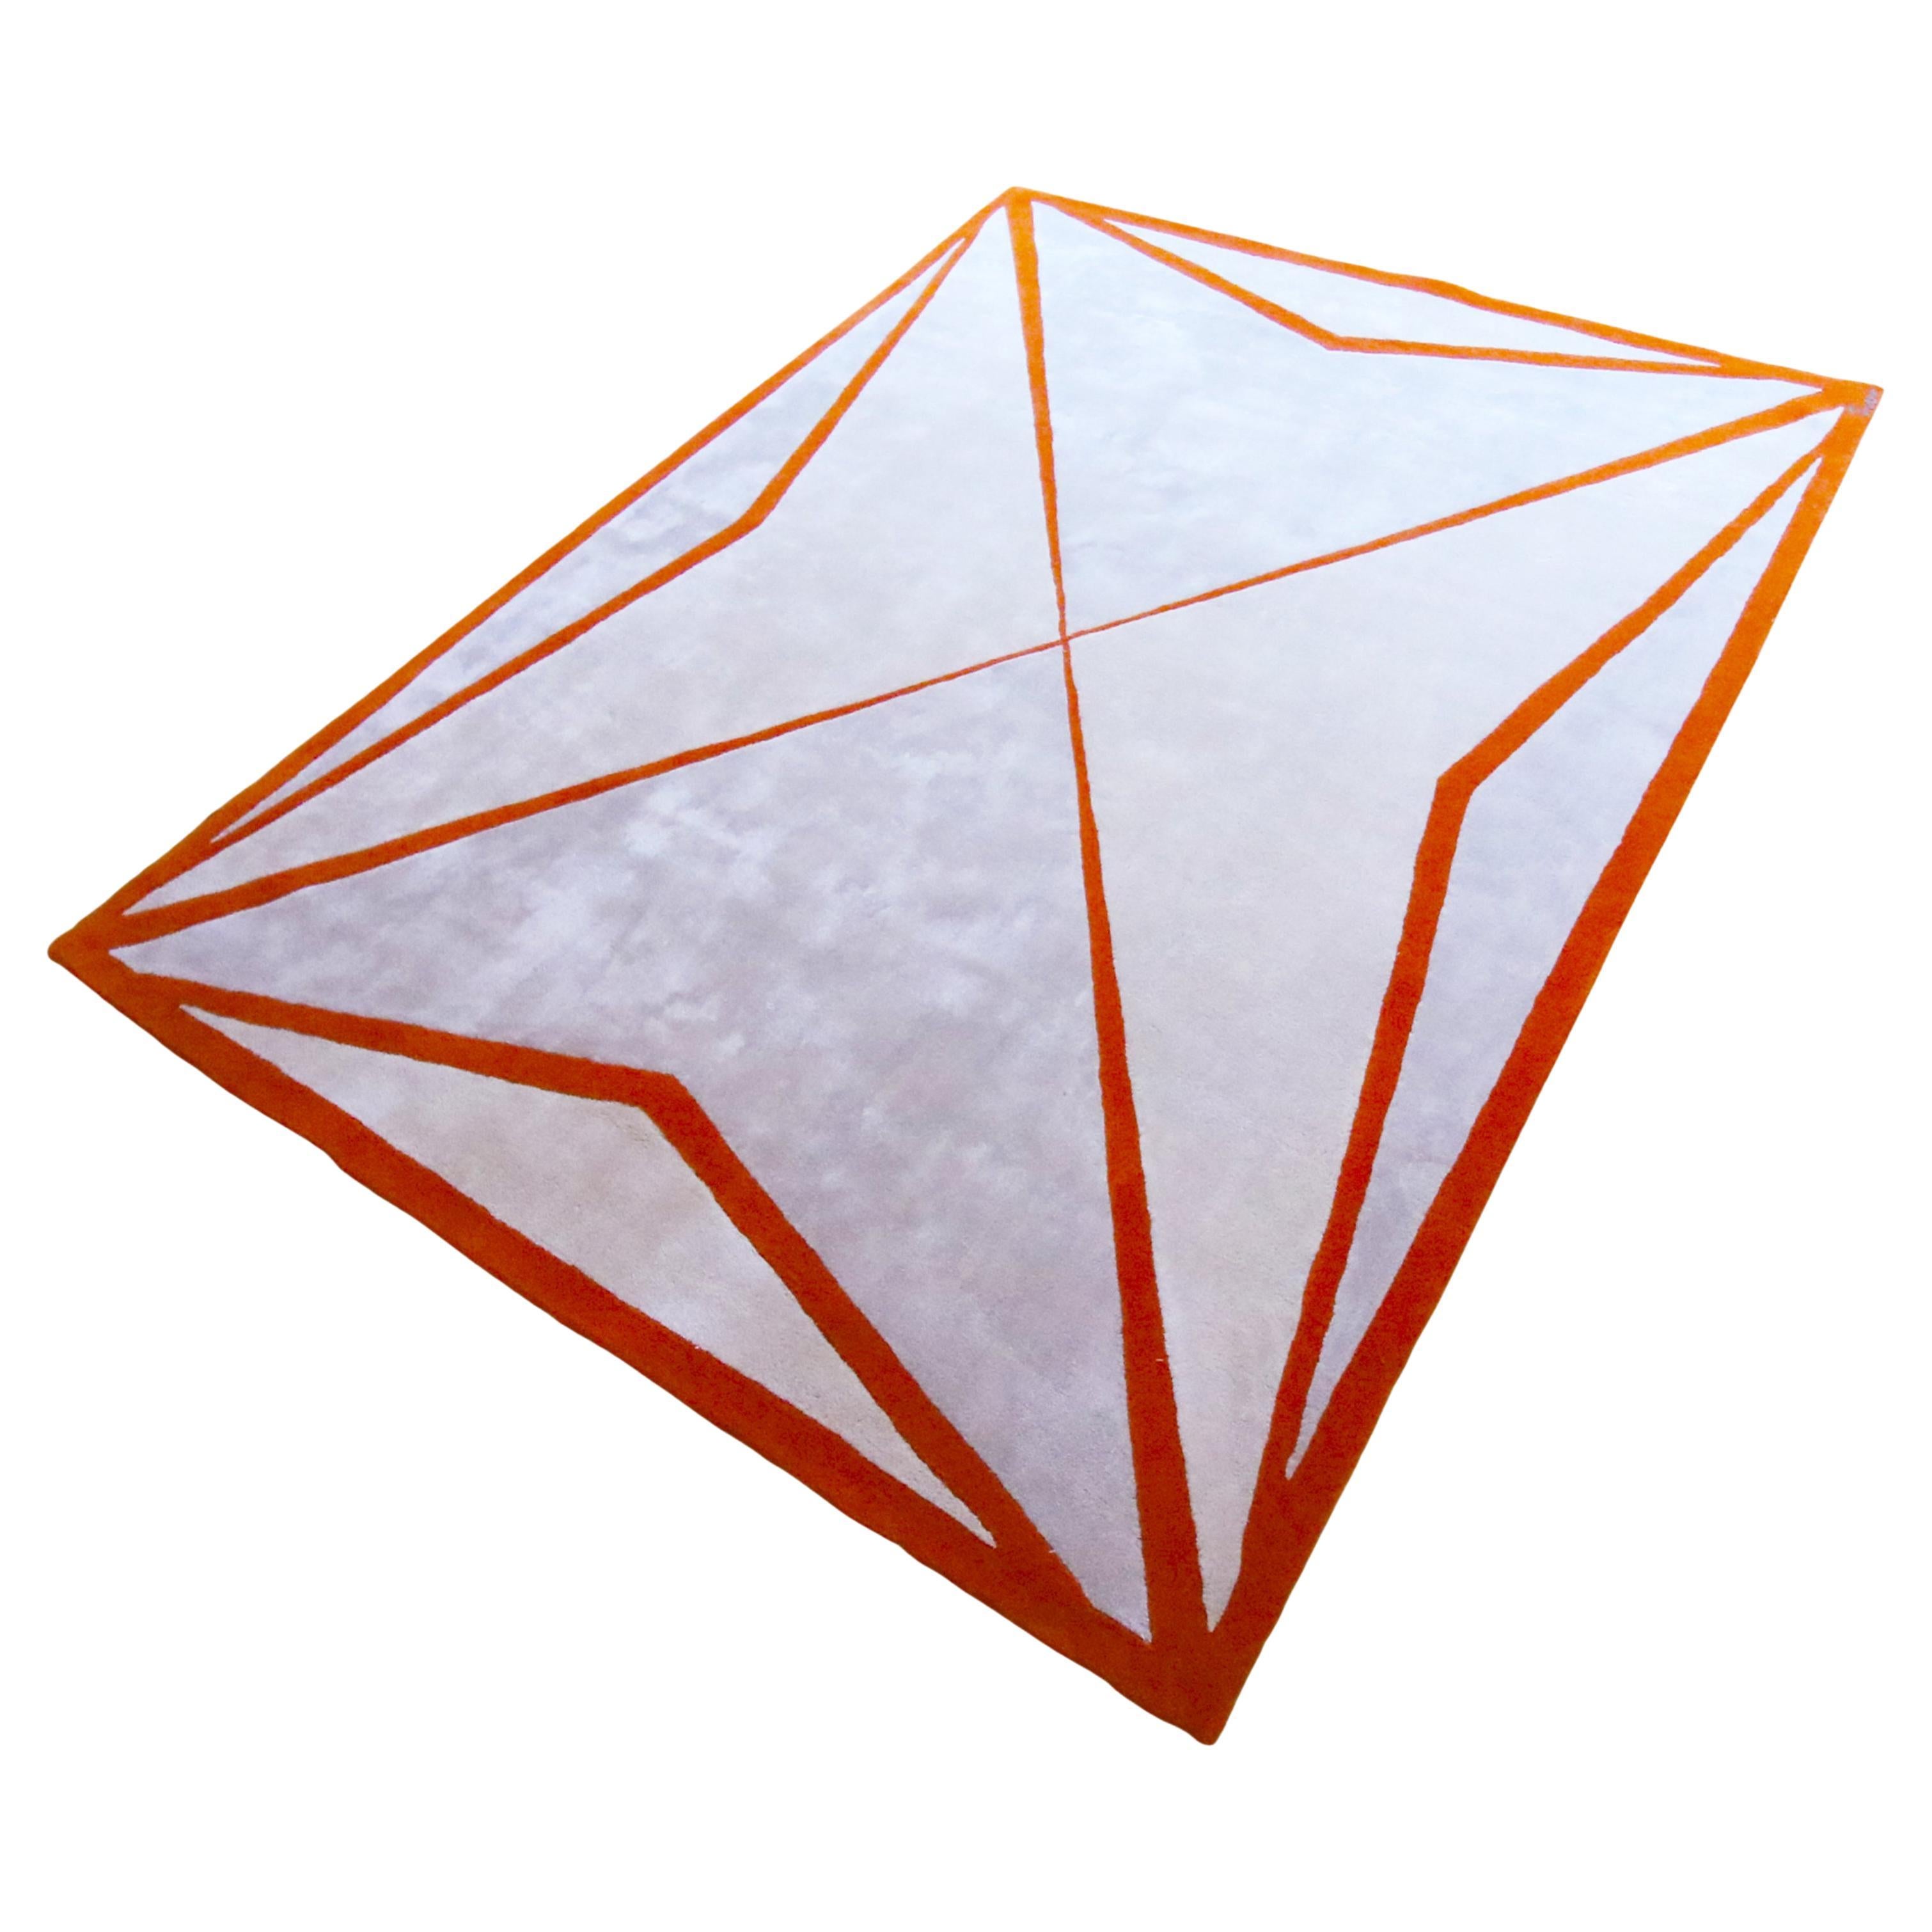 Hand-Tufted White and Orange Rectangular Rug, Contemporary Design